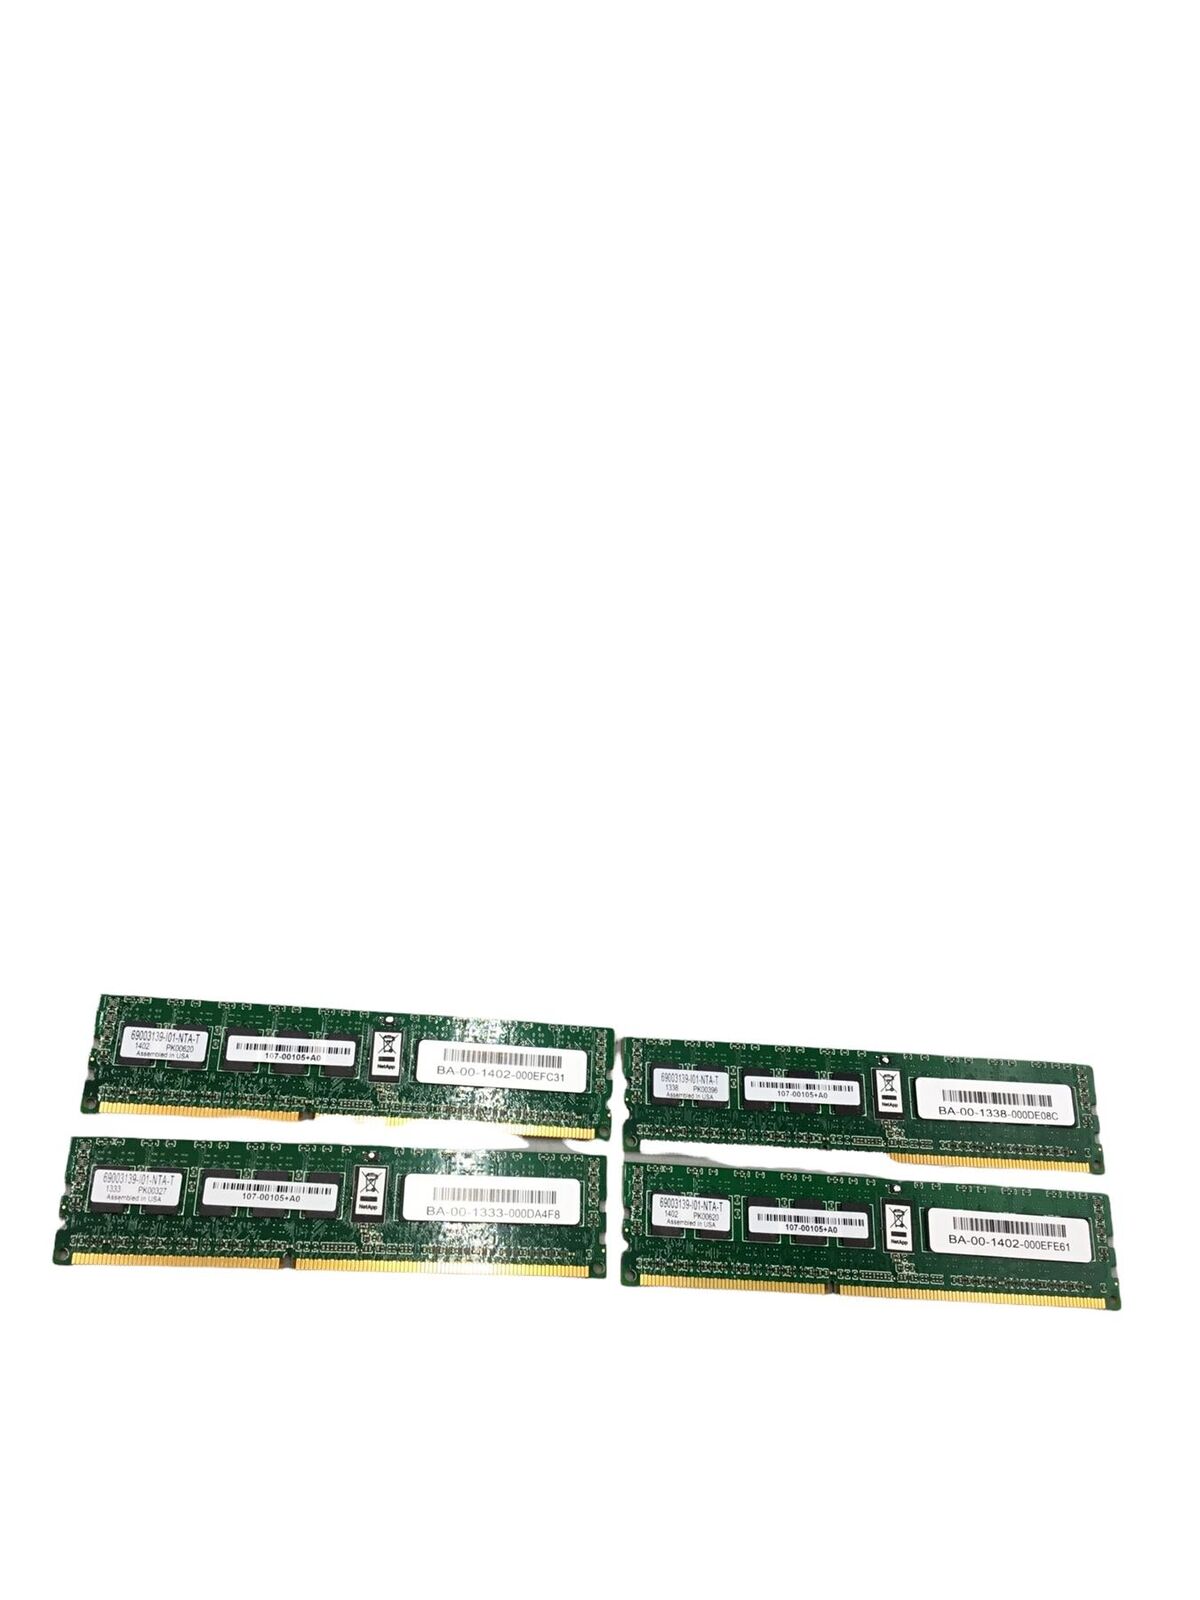 Lot of 4 NetApp 107-00105 8GB DDR3 DIMM Server Memory Module